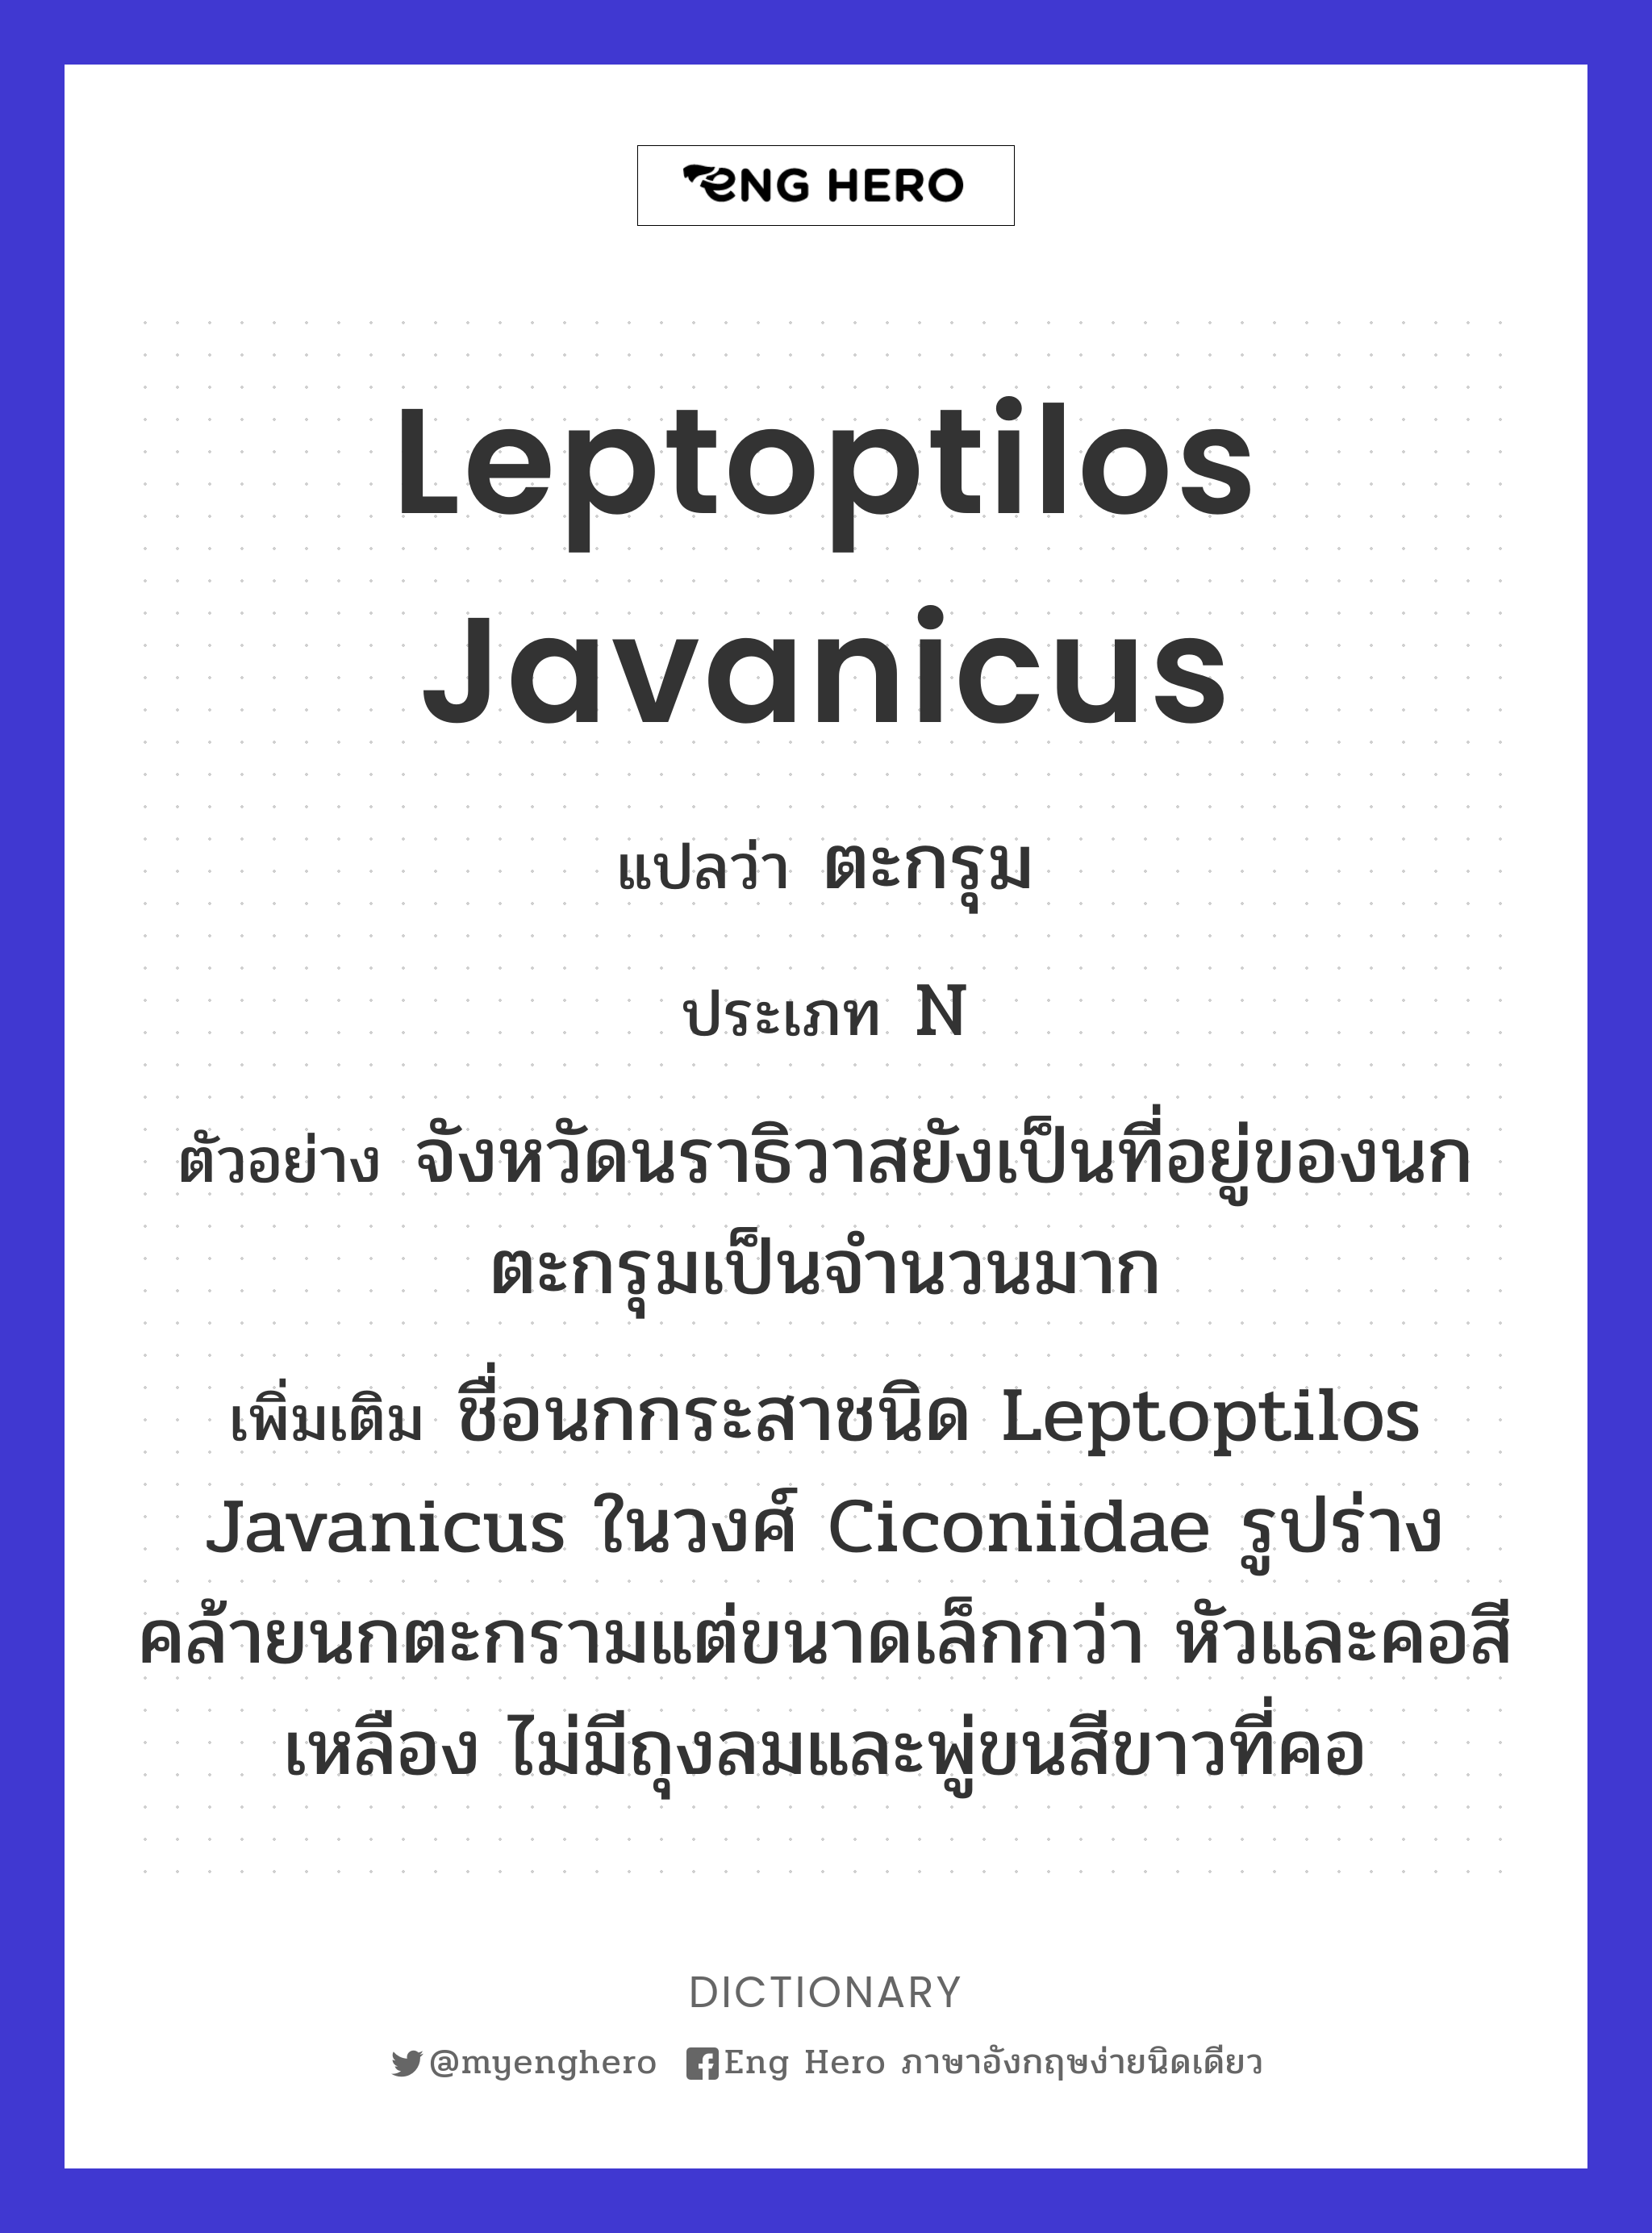 Leptoptilos javanicus